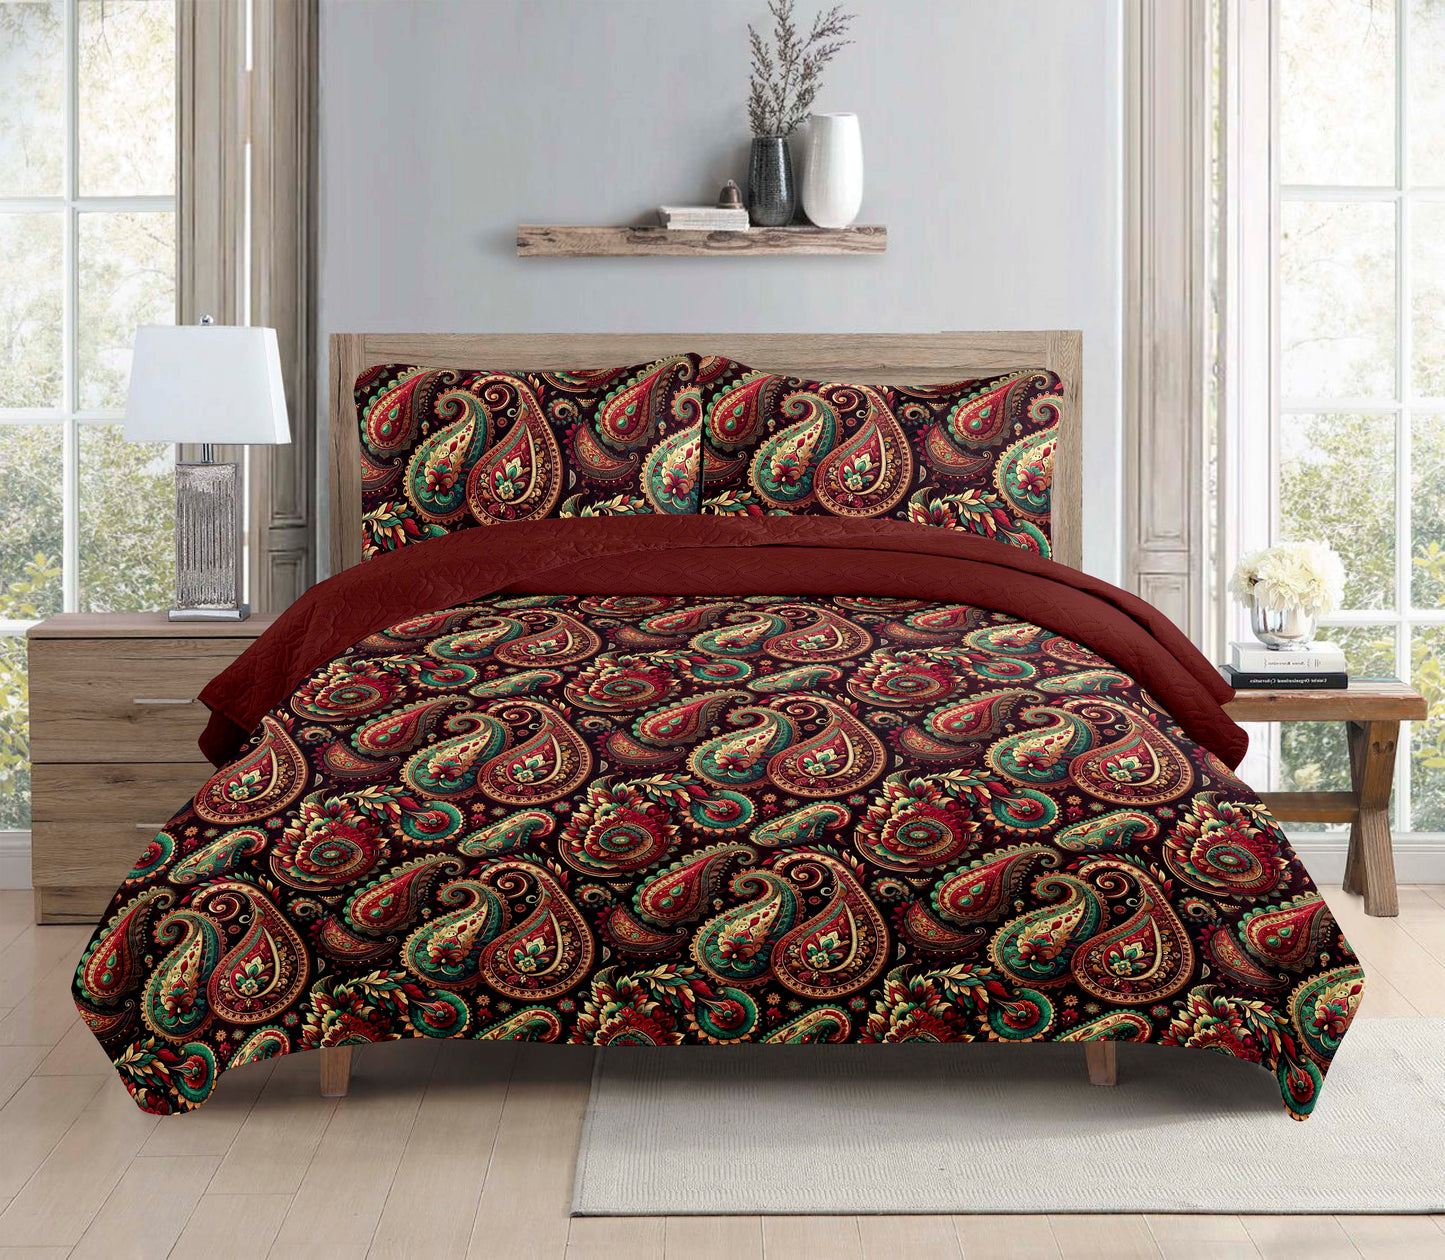 Royal Burgundy Paisley Printed Cotton Reversible Summer Lightweight Bedspread Quilt Set